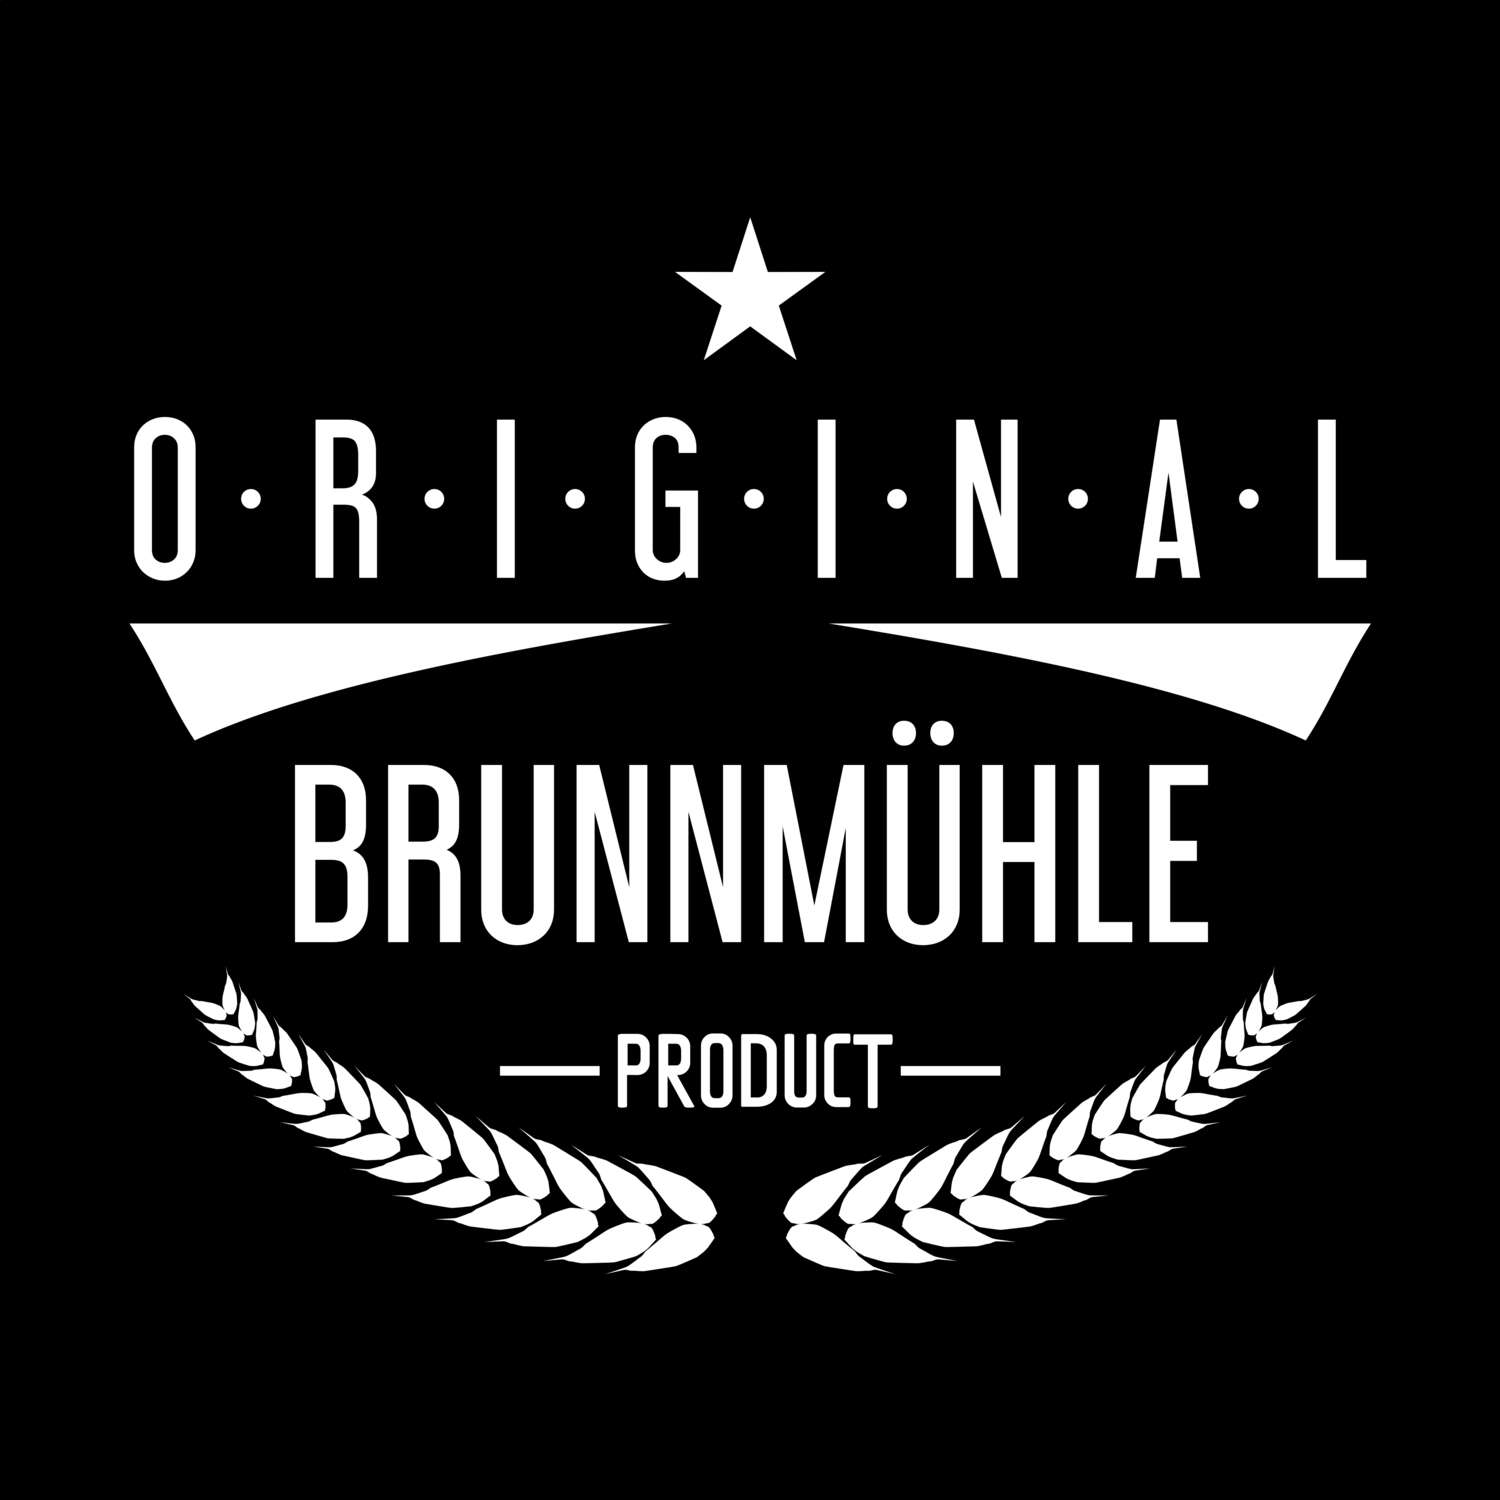 Brunnmühle T-Shirt »Original Product«